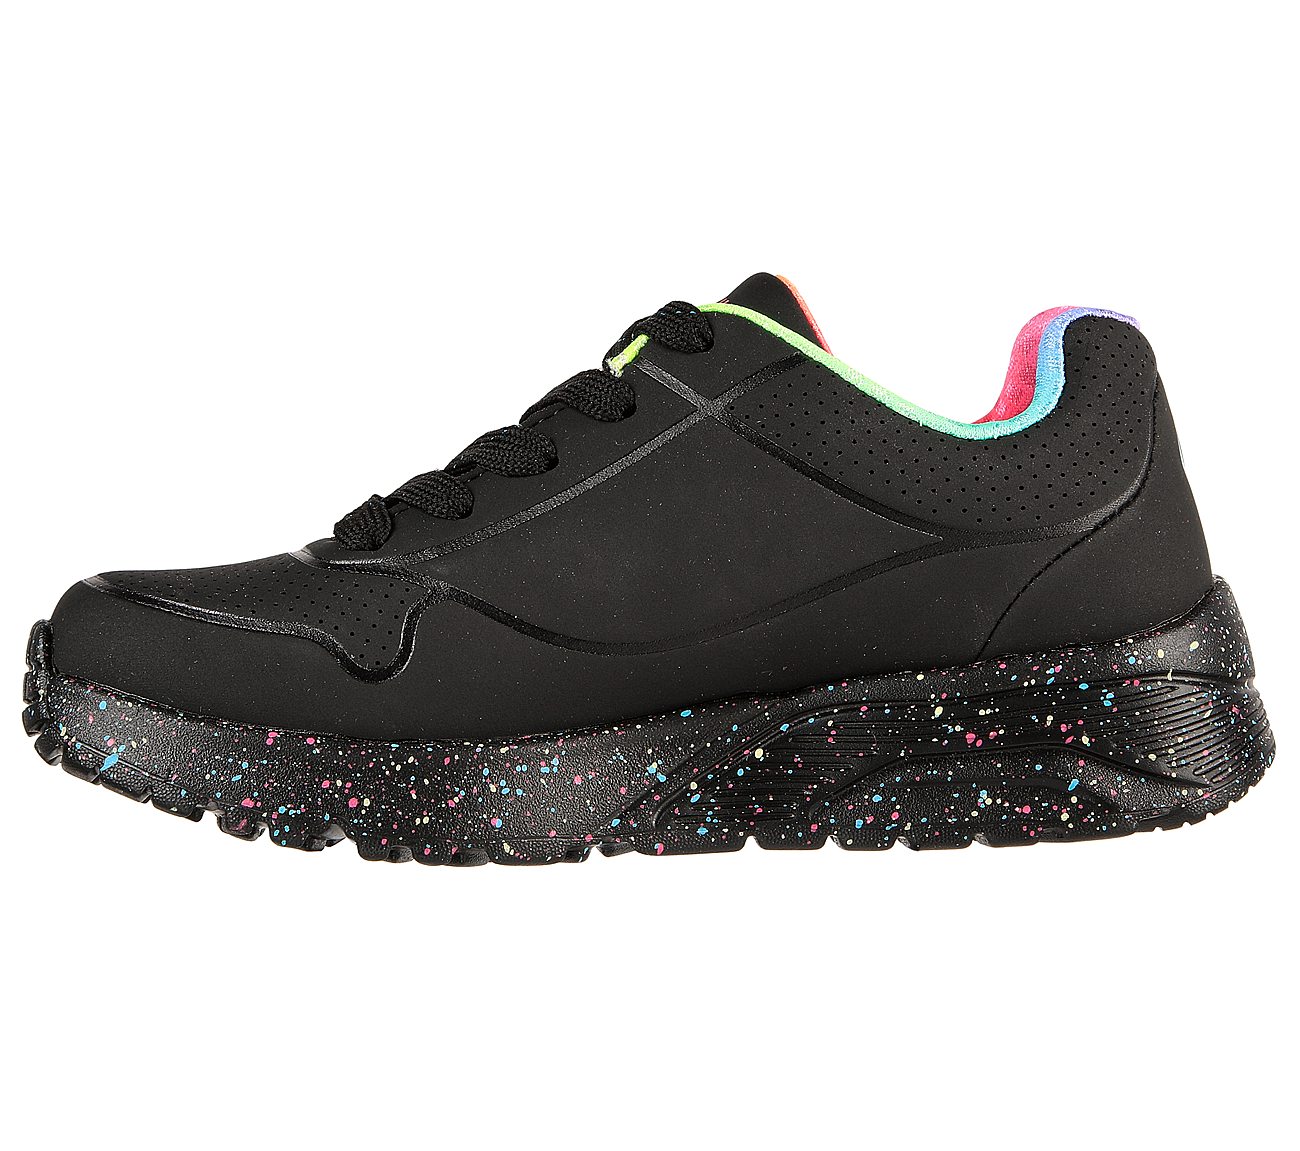 UNO LITE-RAINBOW SPECKLE, BLACK/MULTI Footwear Left View